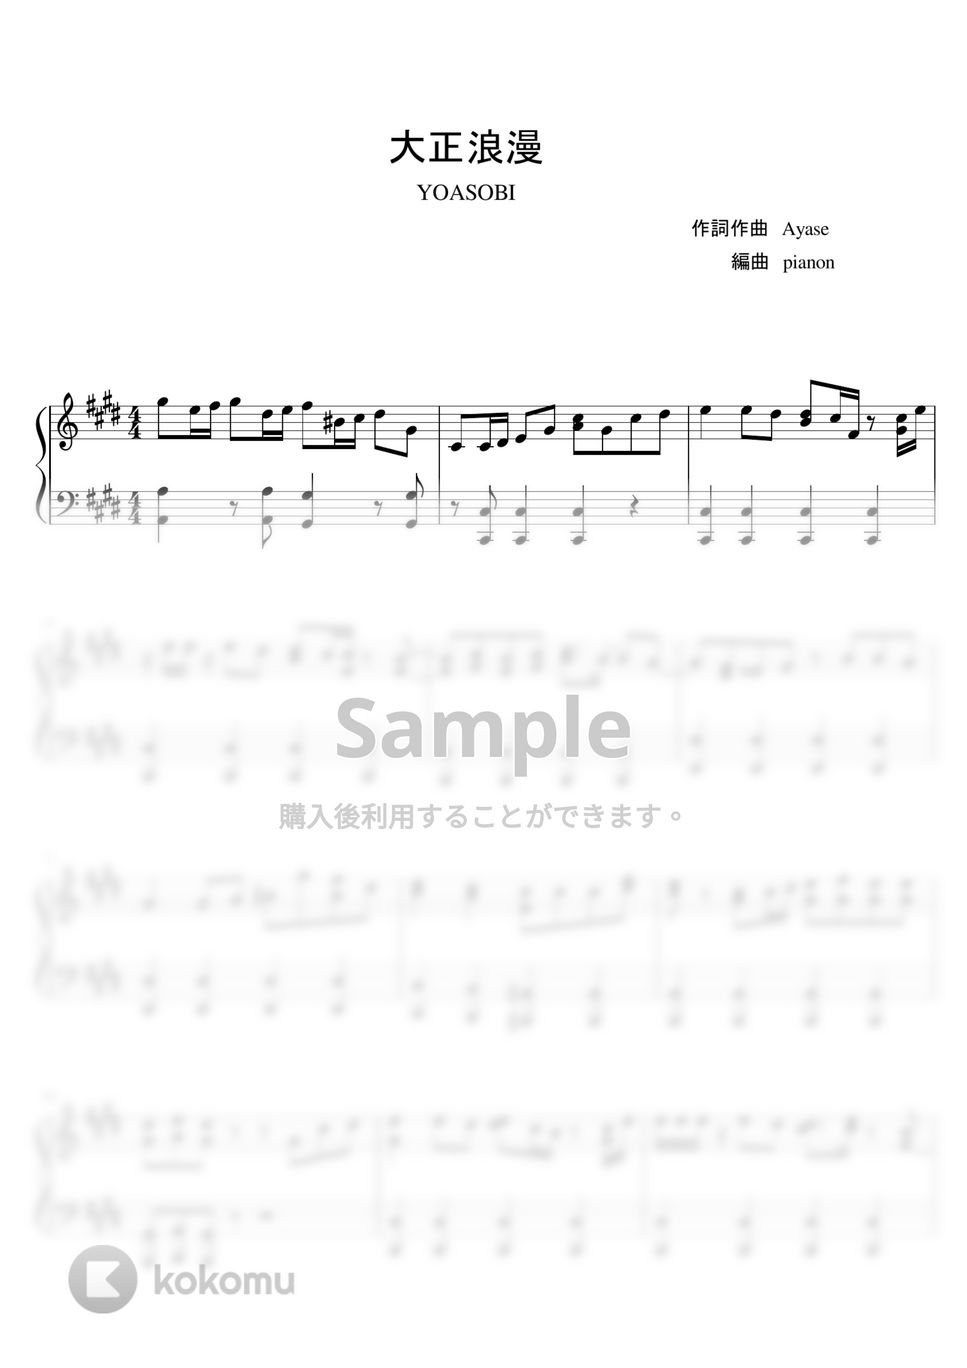 YOASOBI - 大正浪漫 (ピアノソロ上級) by pianon